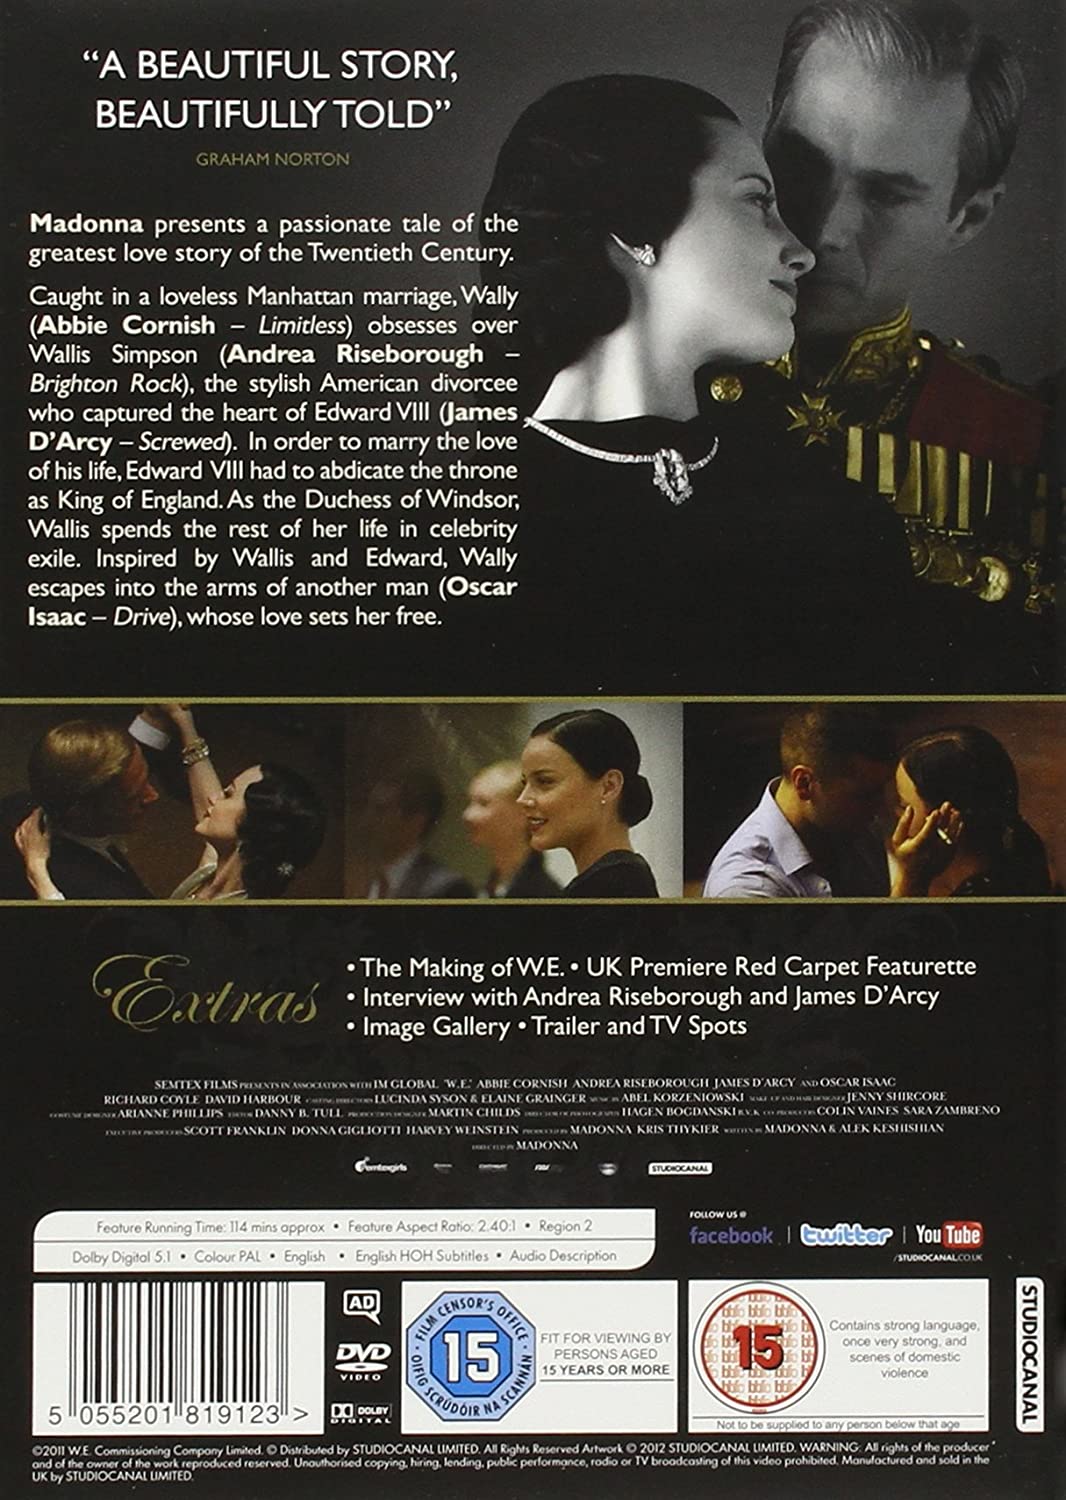 W.E. [2011] - Romance/Drama [DVD]